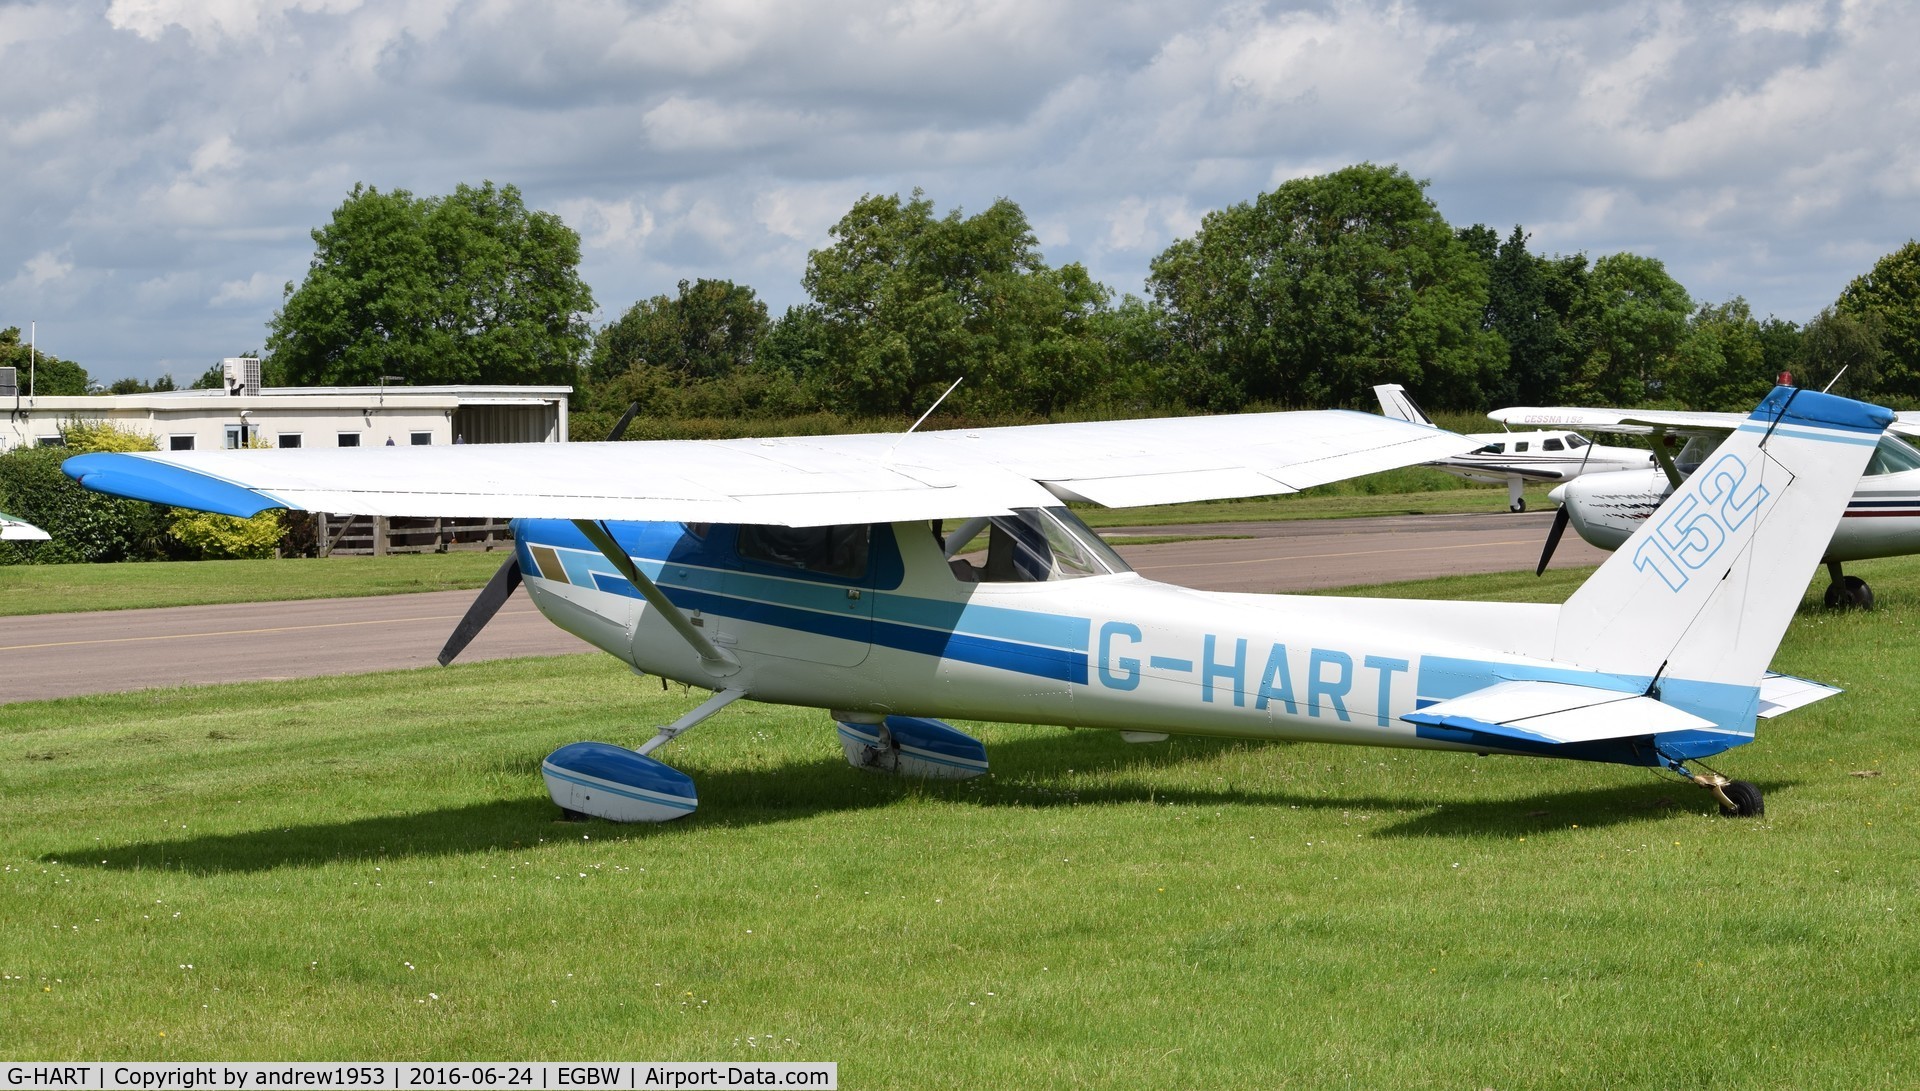 G-HART, 1979 Cessna 152 C/N 15279734, G-HART at Wellesborne.